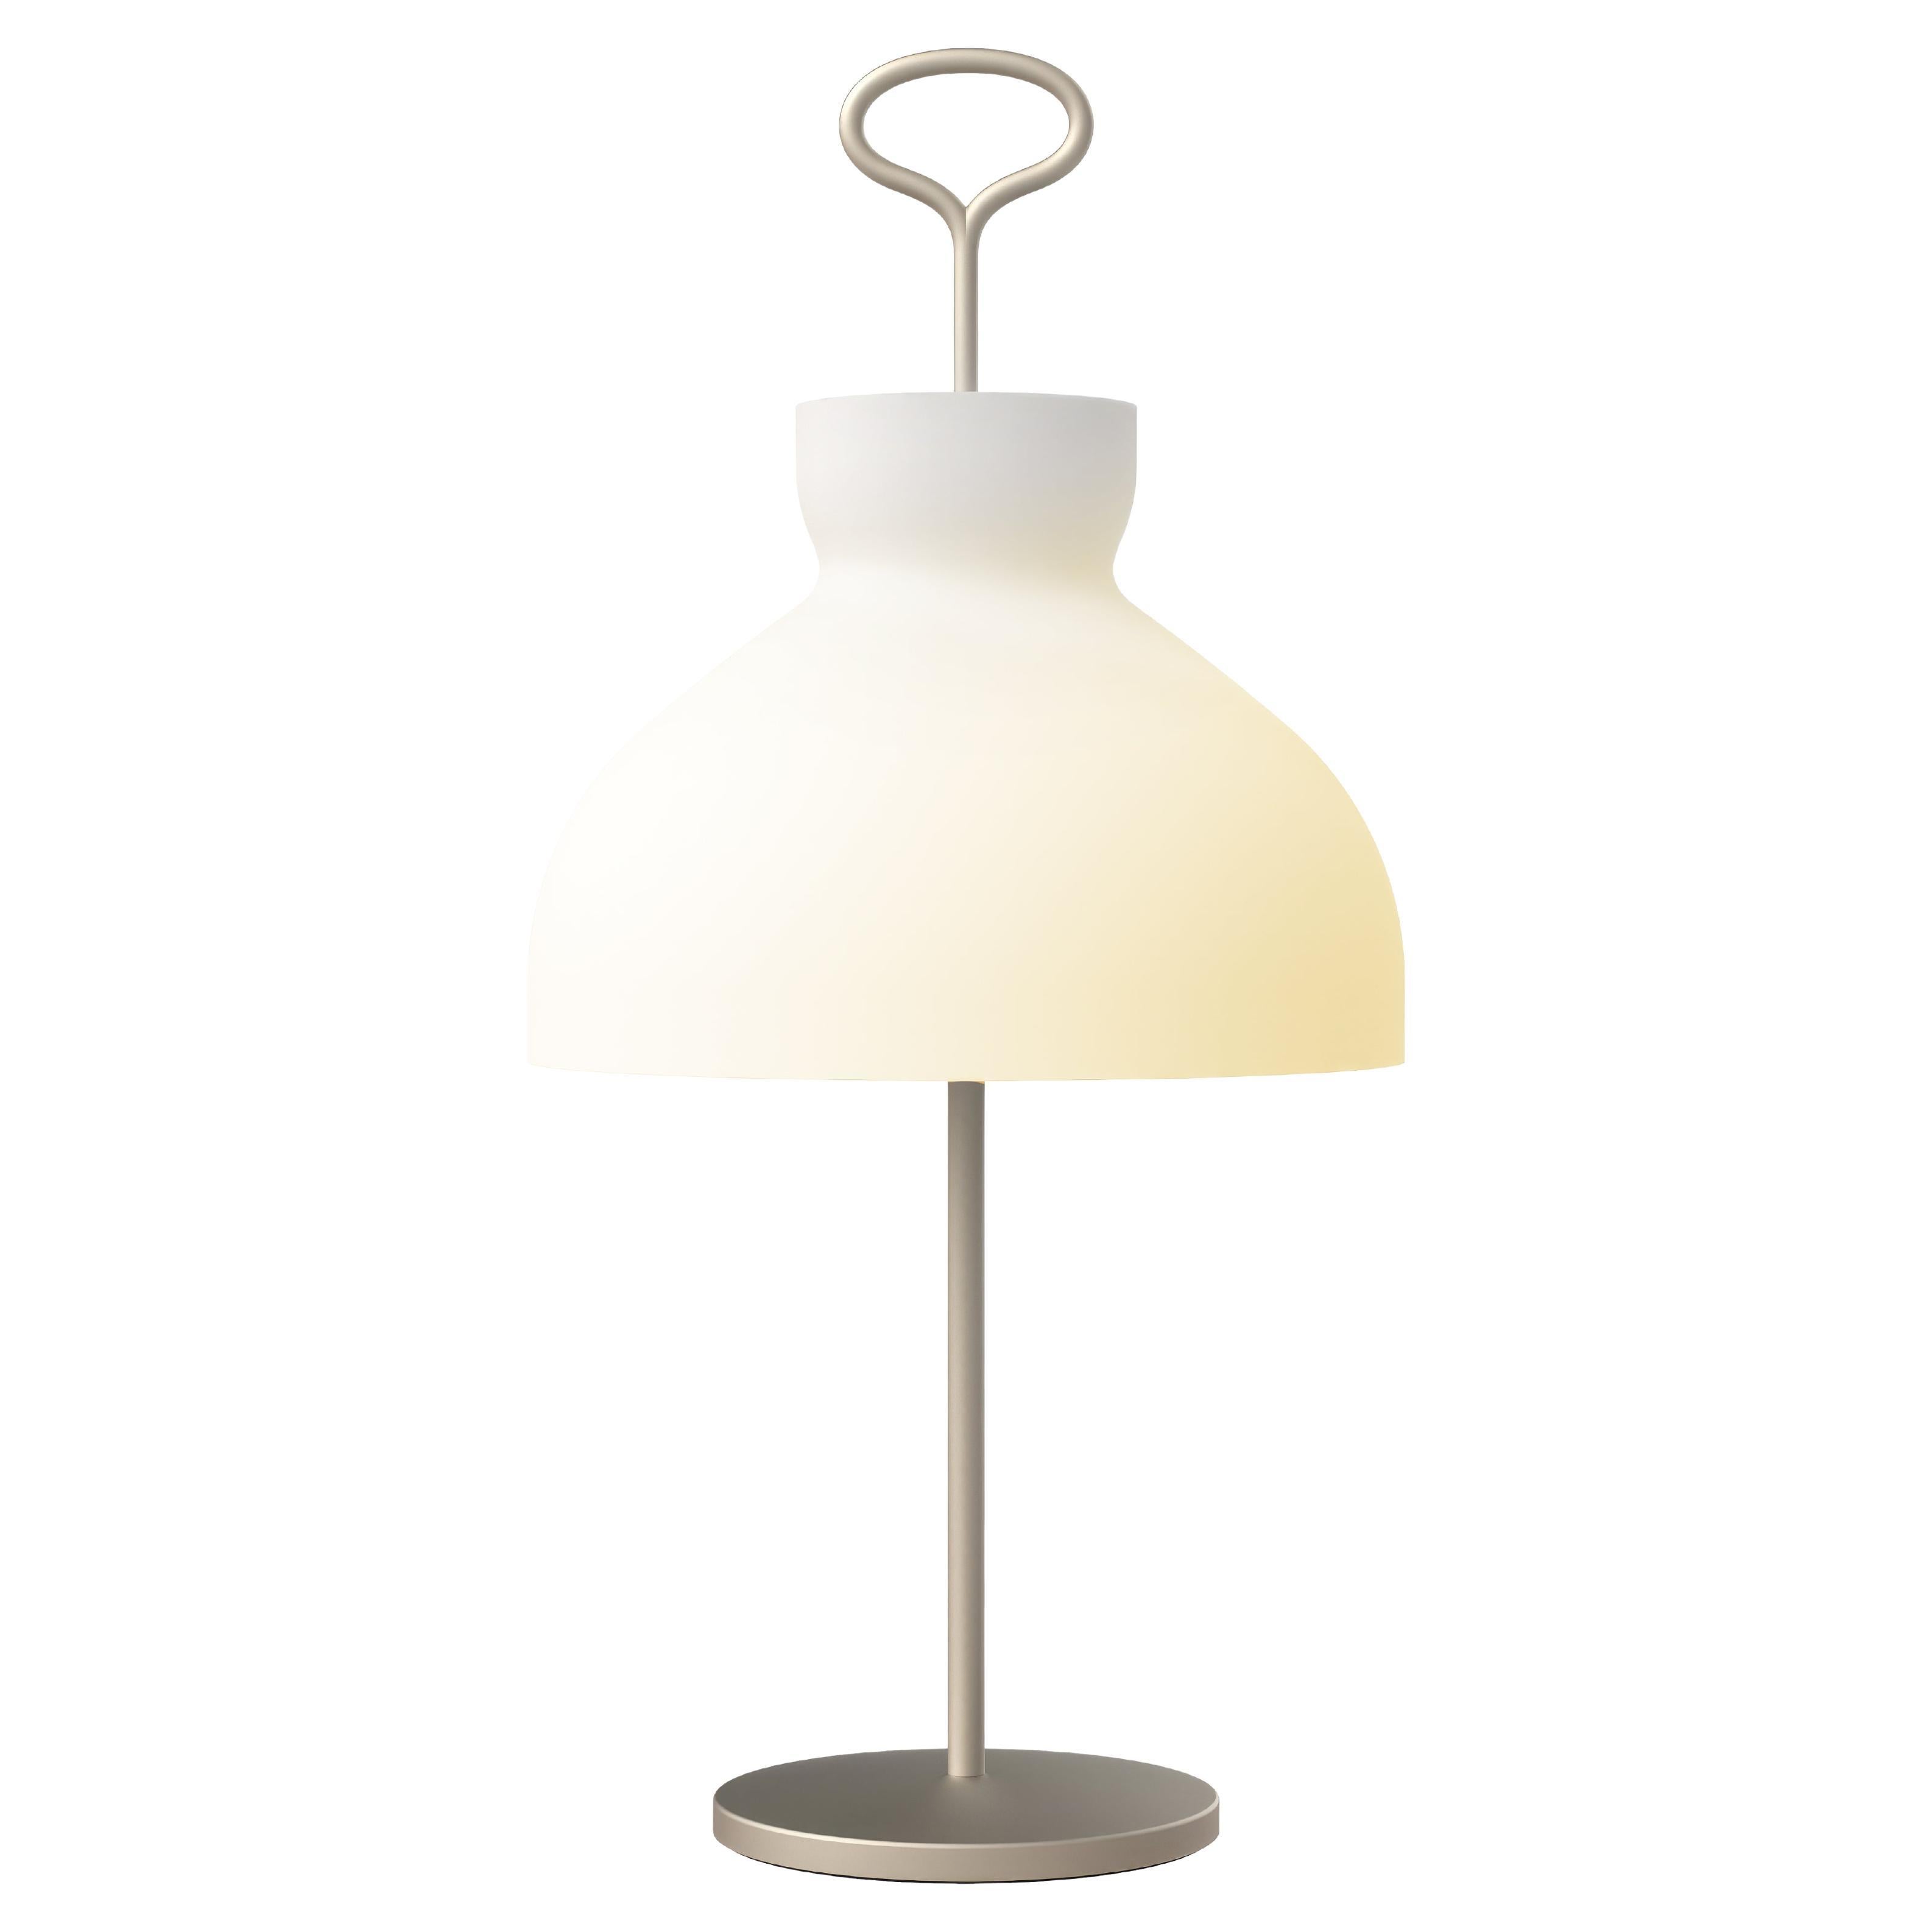 Large Ignazio Gardella 'Arenzano' Table Lamp in Satin Nickel and Glass